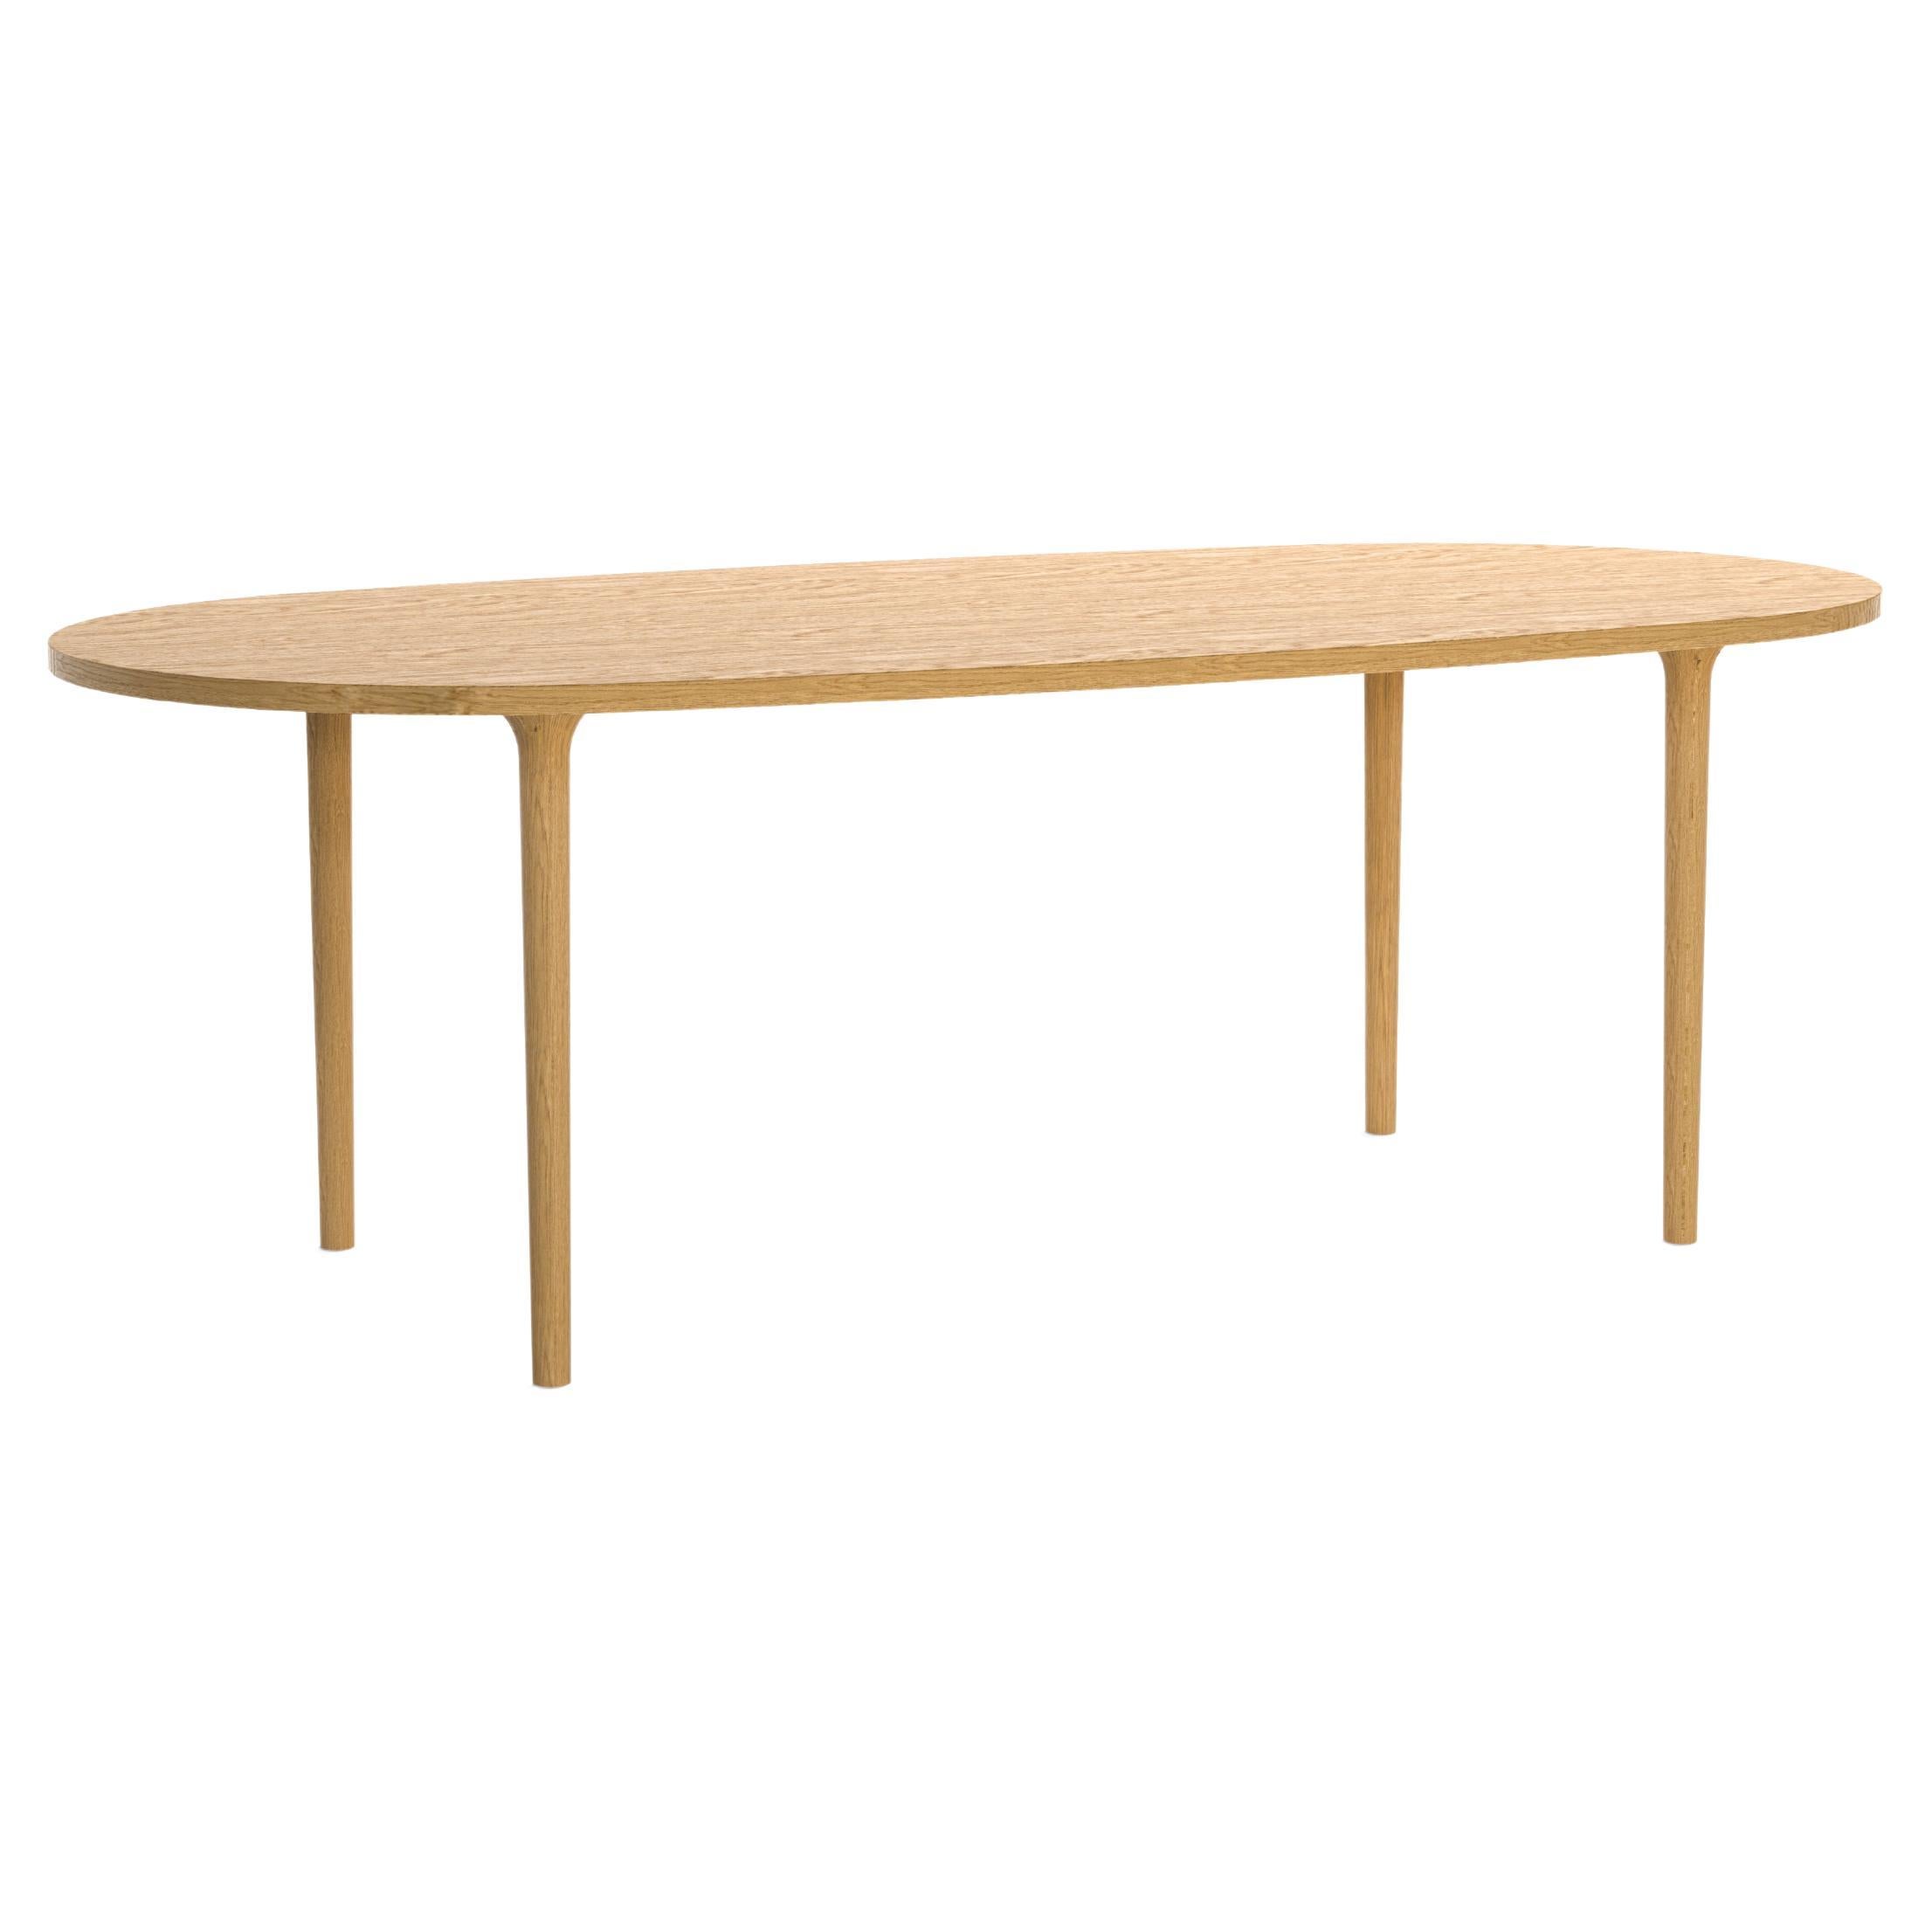 Table moderne minimaliste en bois de chêne Oval